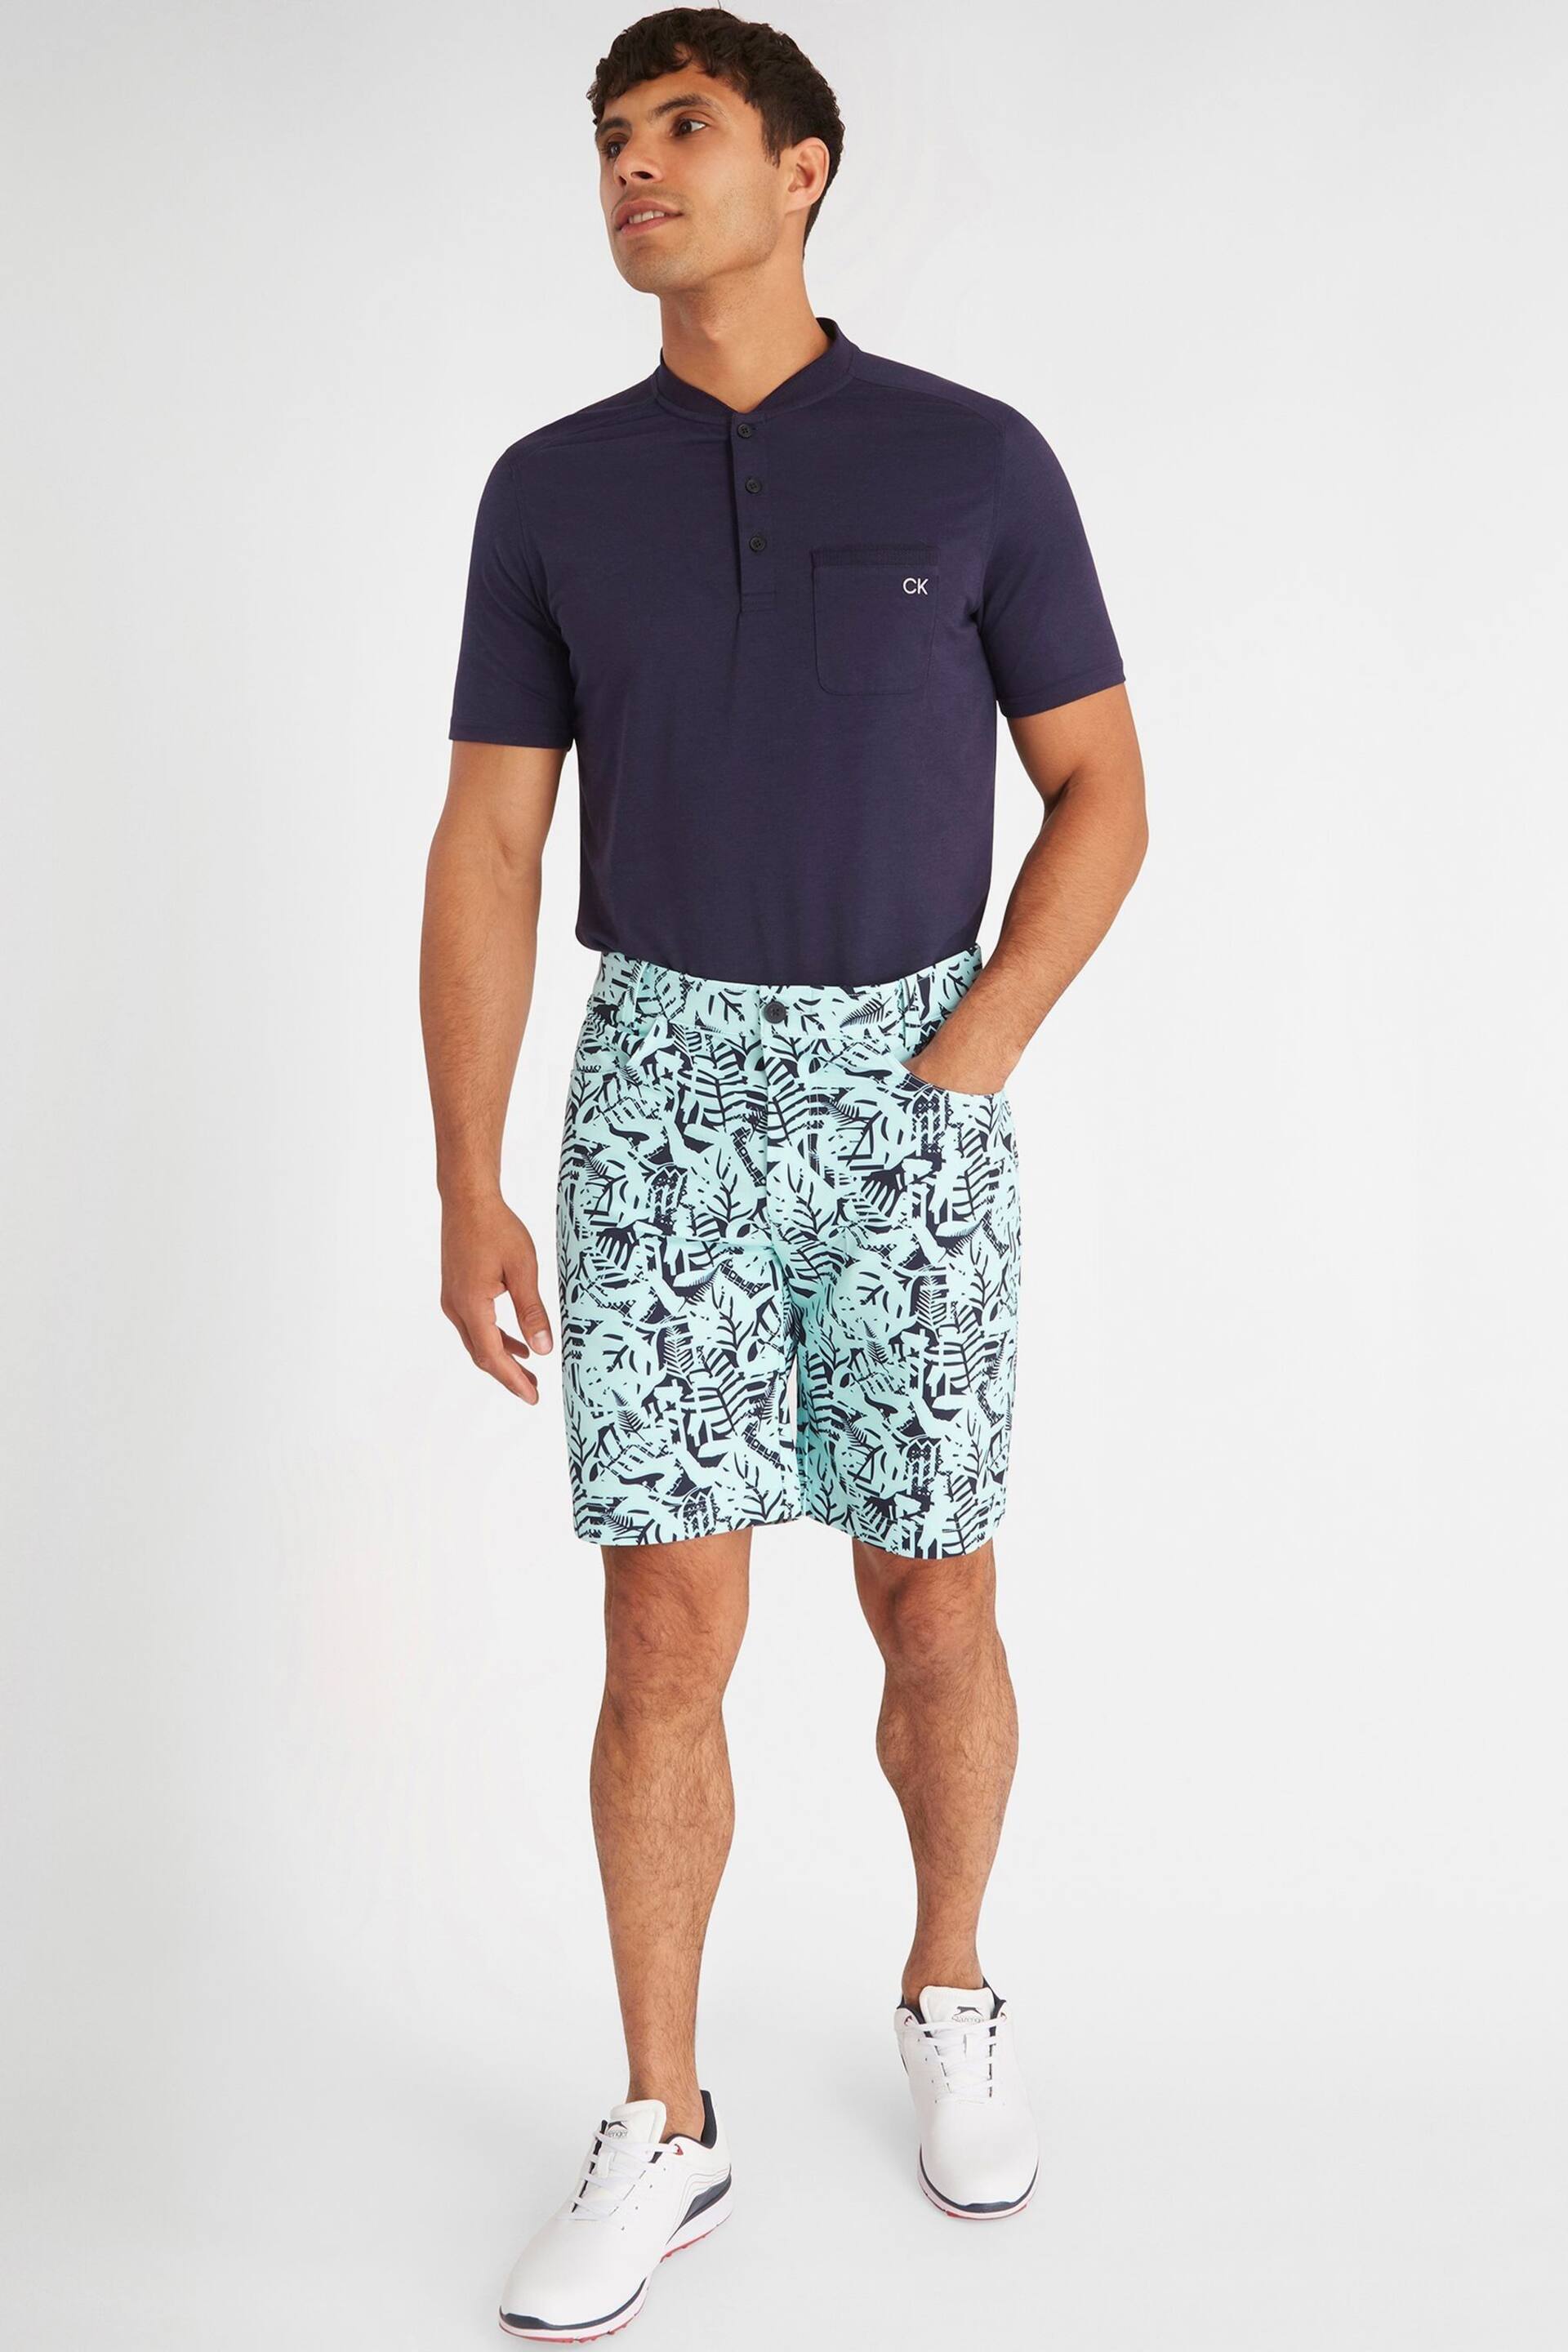 Calvin Klein Golf Blue Printed Genius Shorts - Image 3 of 10